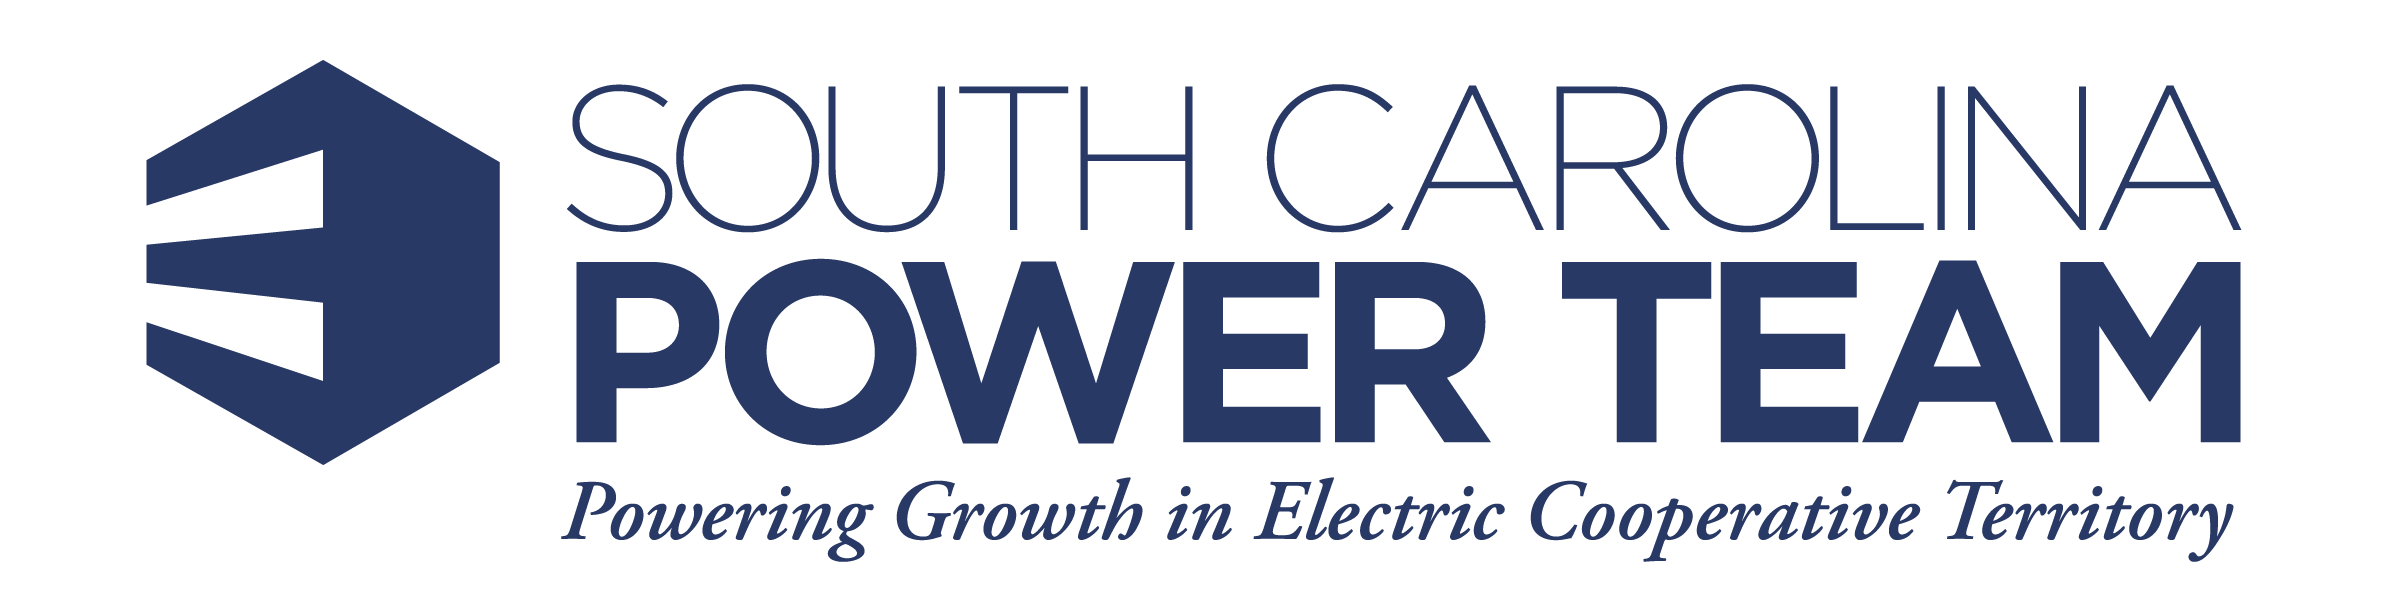 sc power team logo